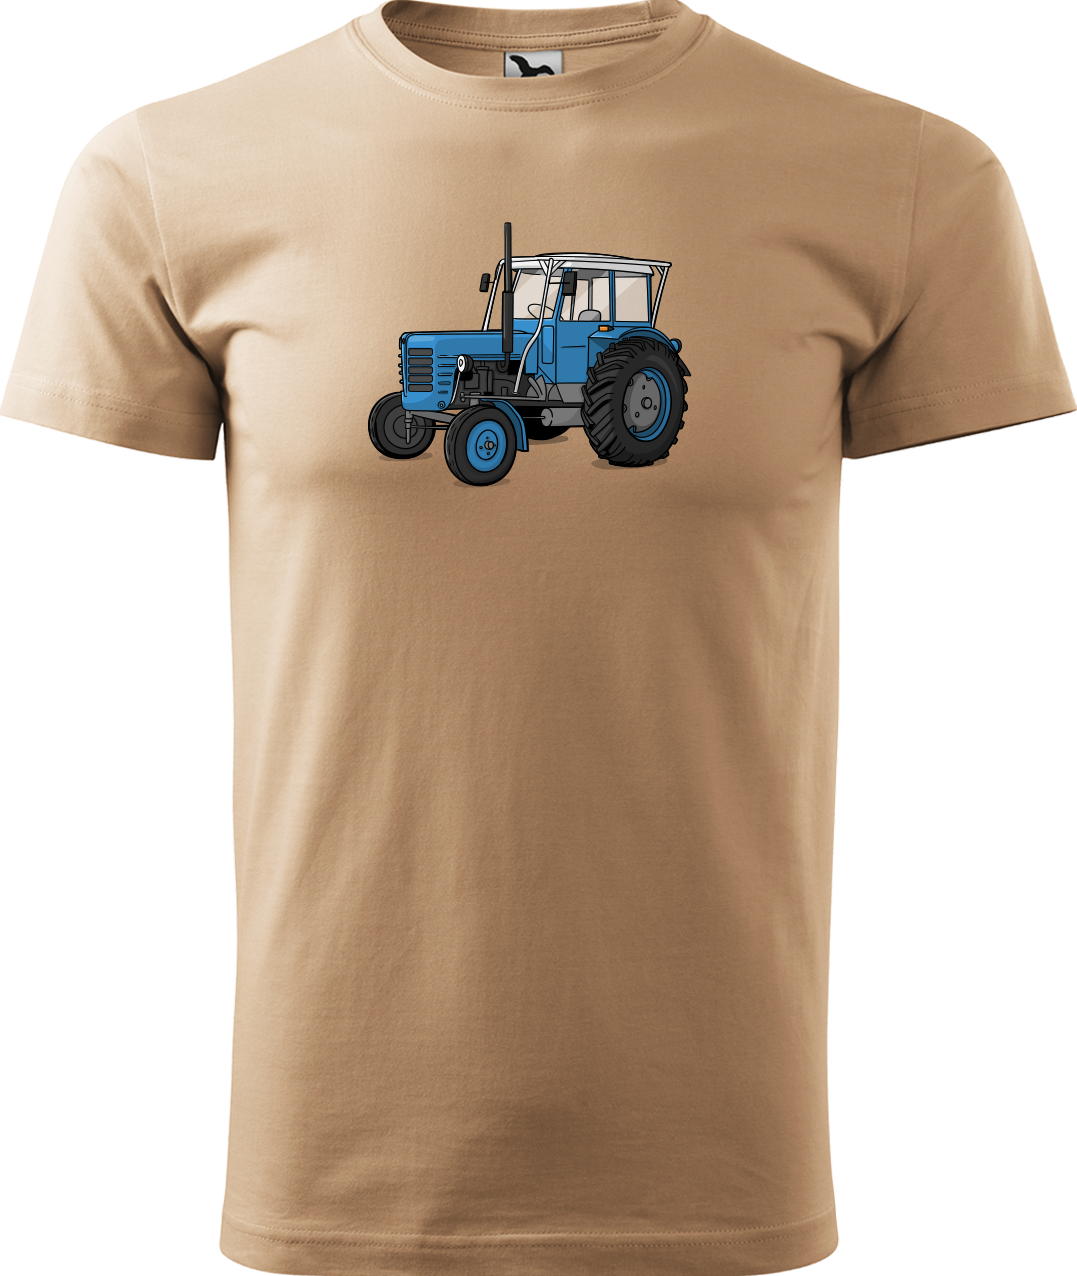 Tričko s traktorem - Starý traktor Velikost: M, Barva: Písková (08)